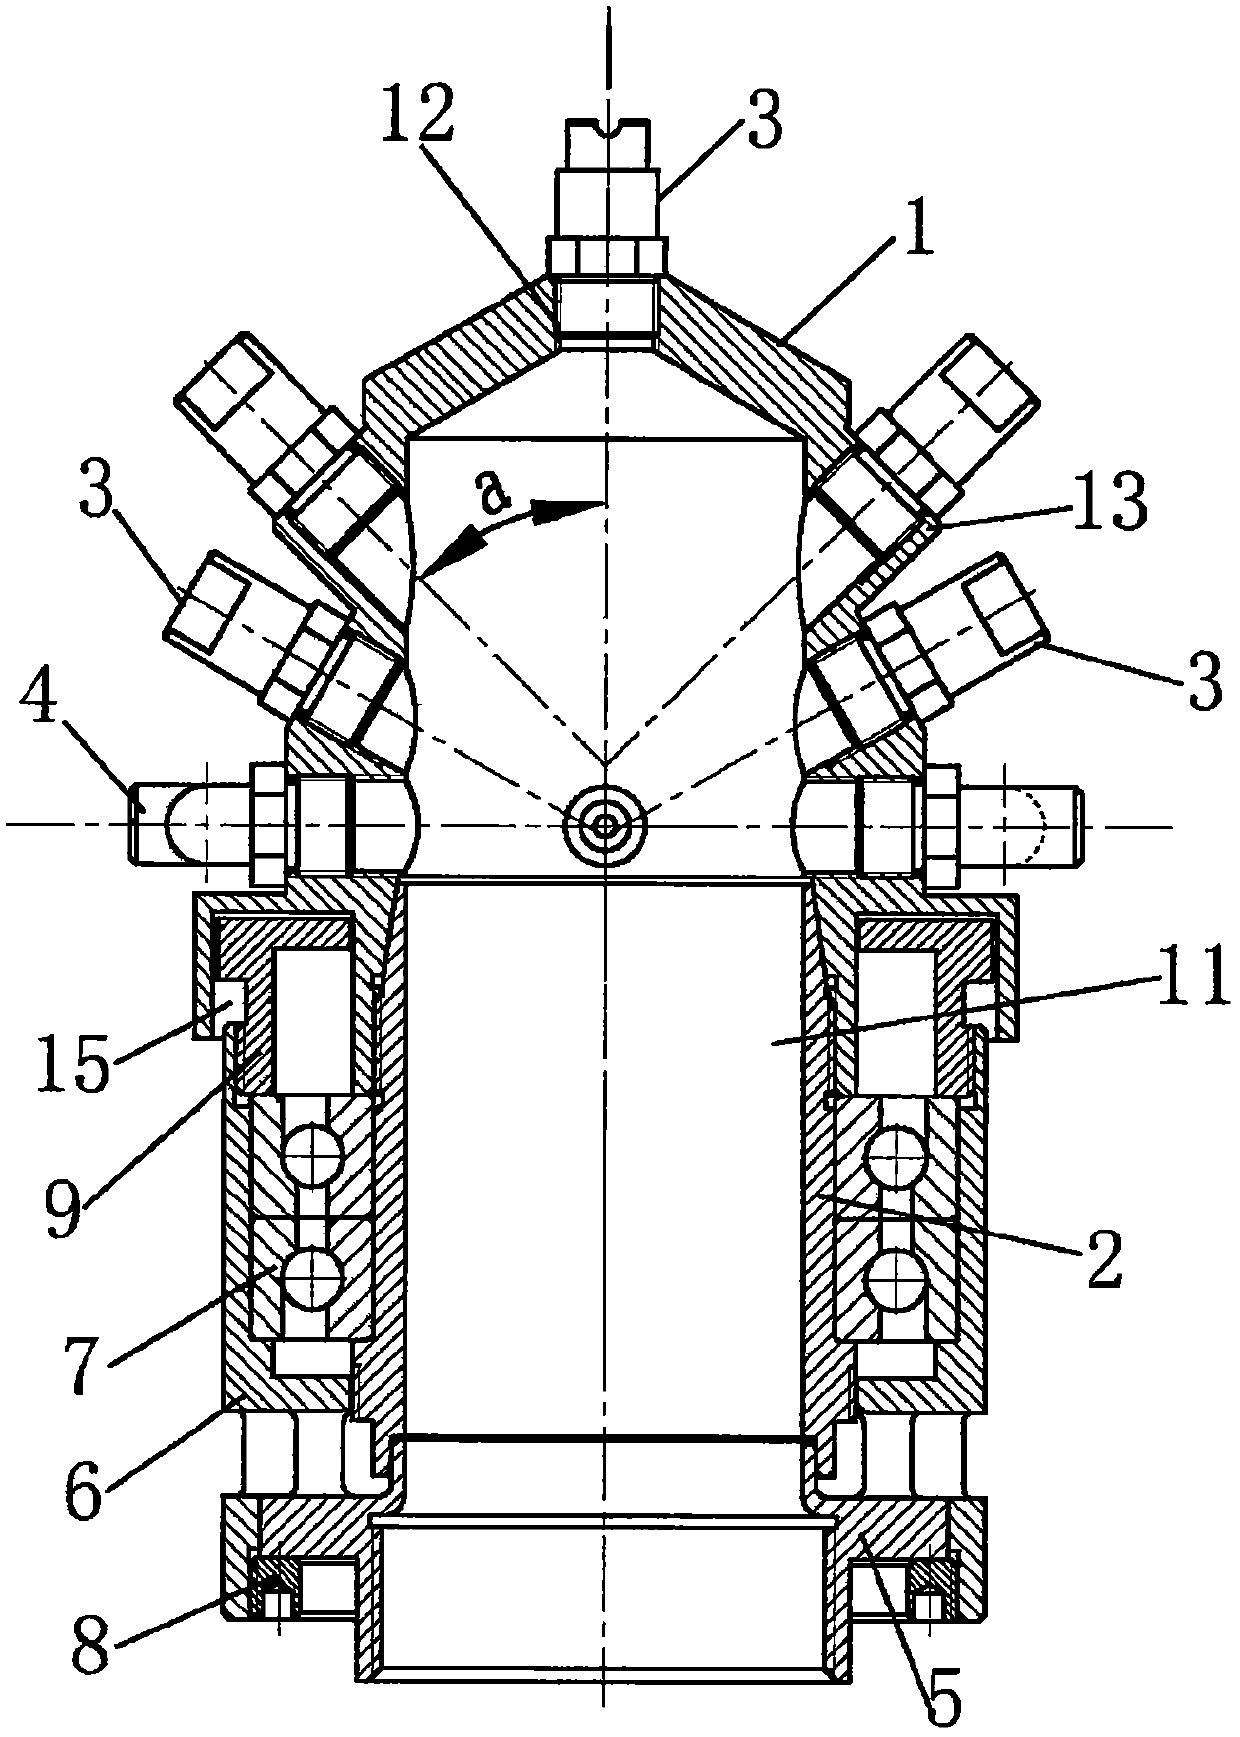 A multi-arm automatic rotary sprinkler